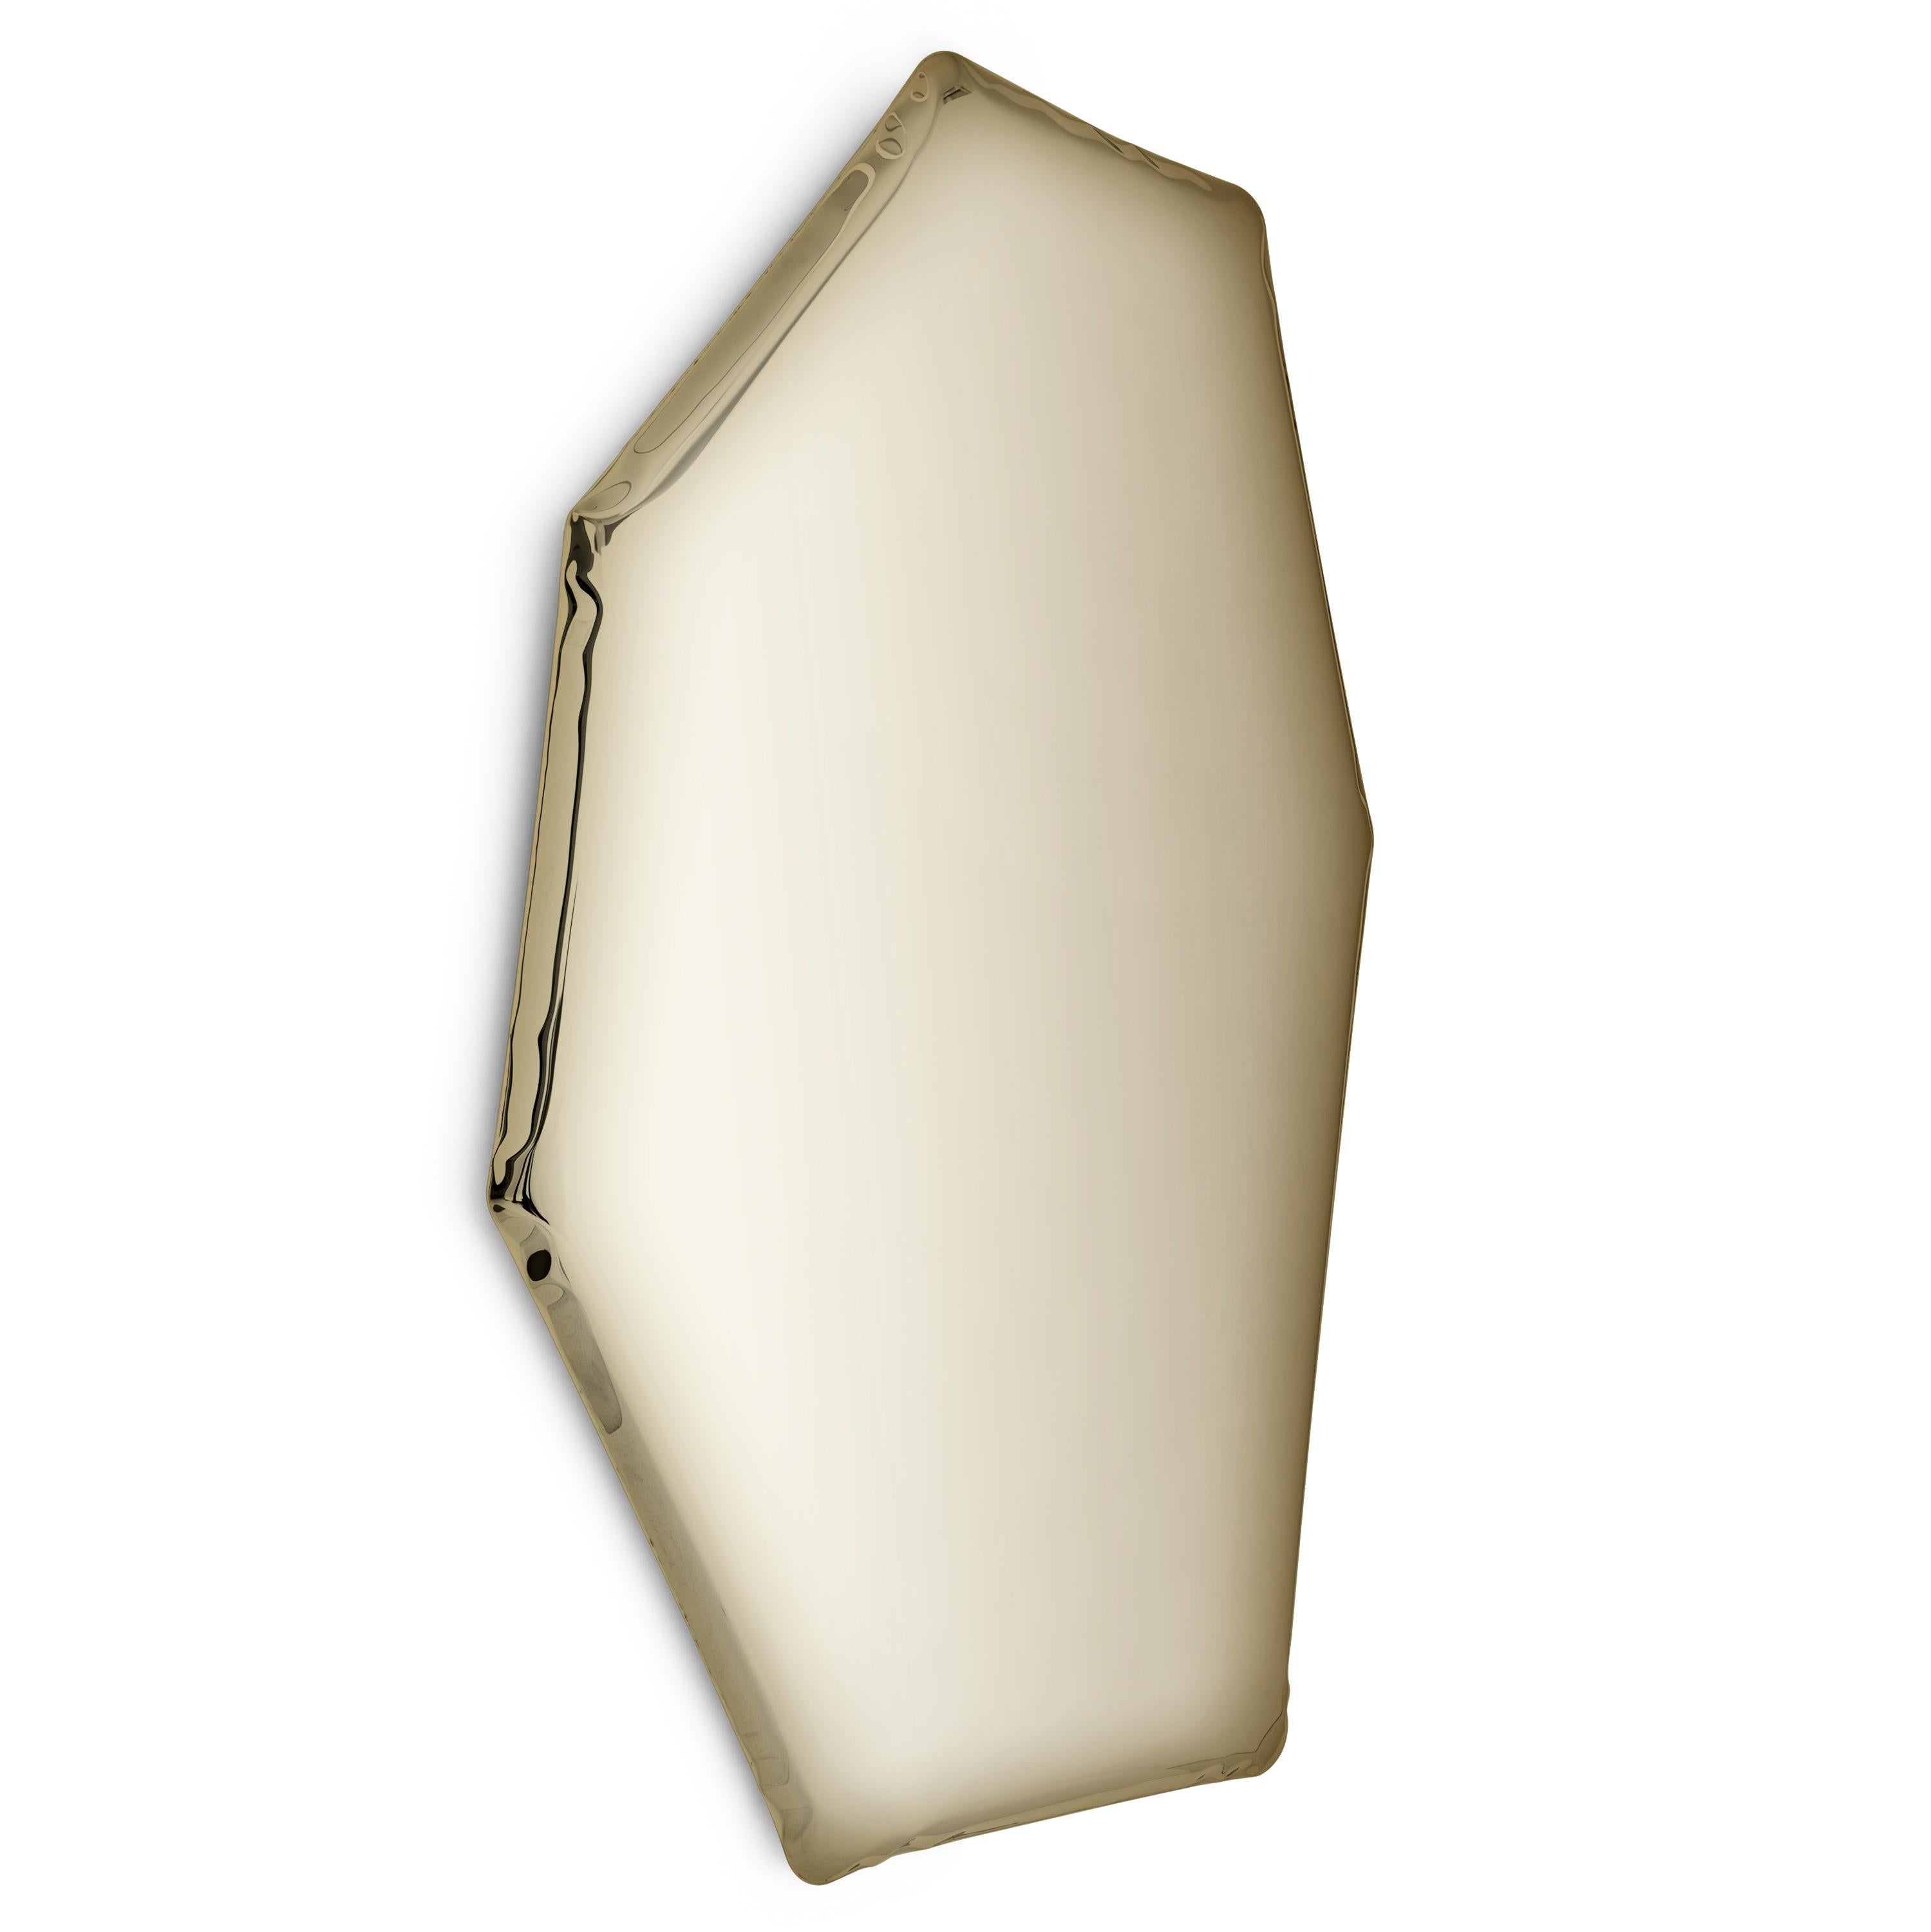 Light Gold C2 sculptural wall mirror by Zieta
Dimensions: D 6 x W 94 x H 149 cm 
Material: Stainless steel. 
Finish: Light gold. 
Available in finishes: Stainless Steel, Deep Space Blue, Emerald, Saphire, Saphire/Emerald, Dark Matter, Red Rubin,